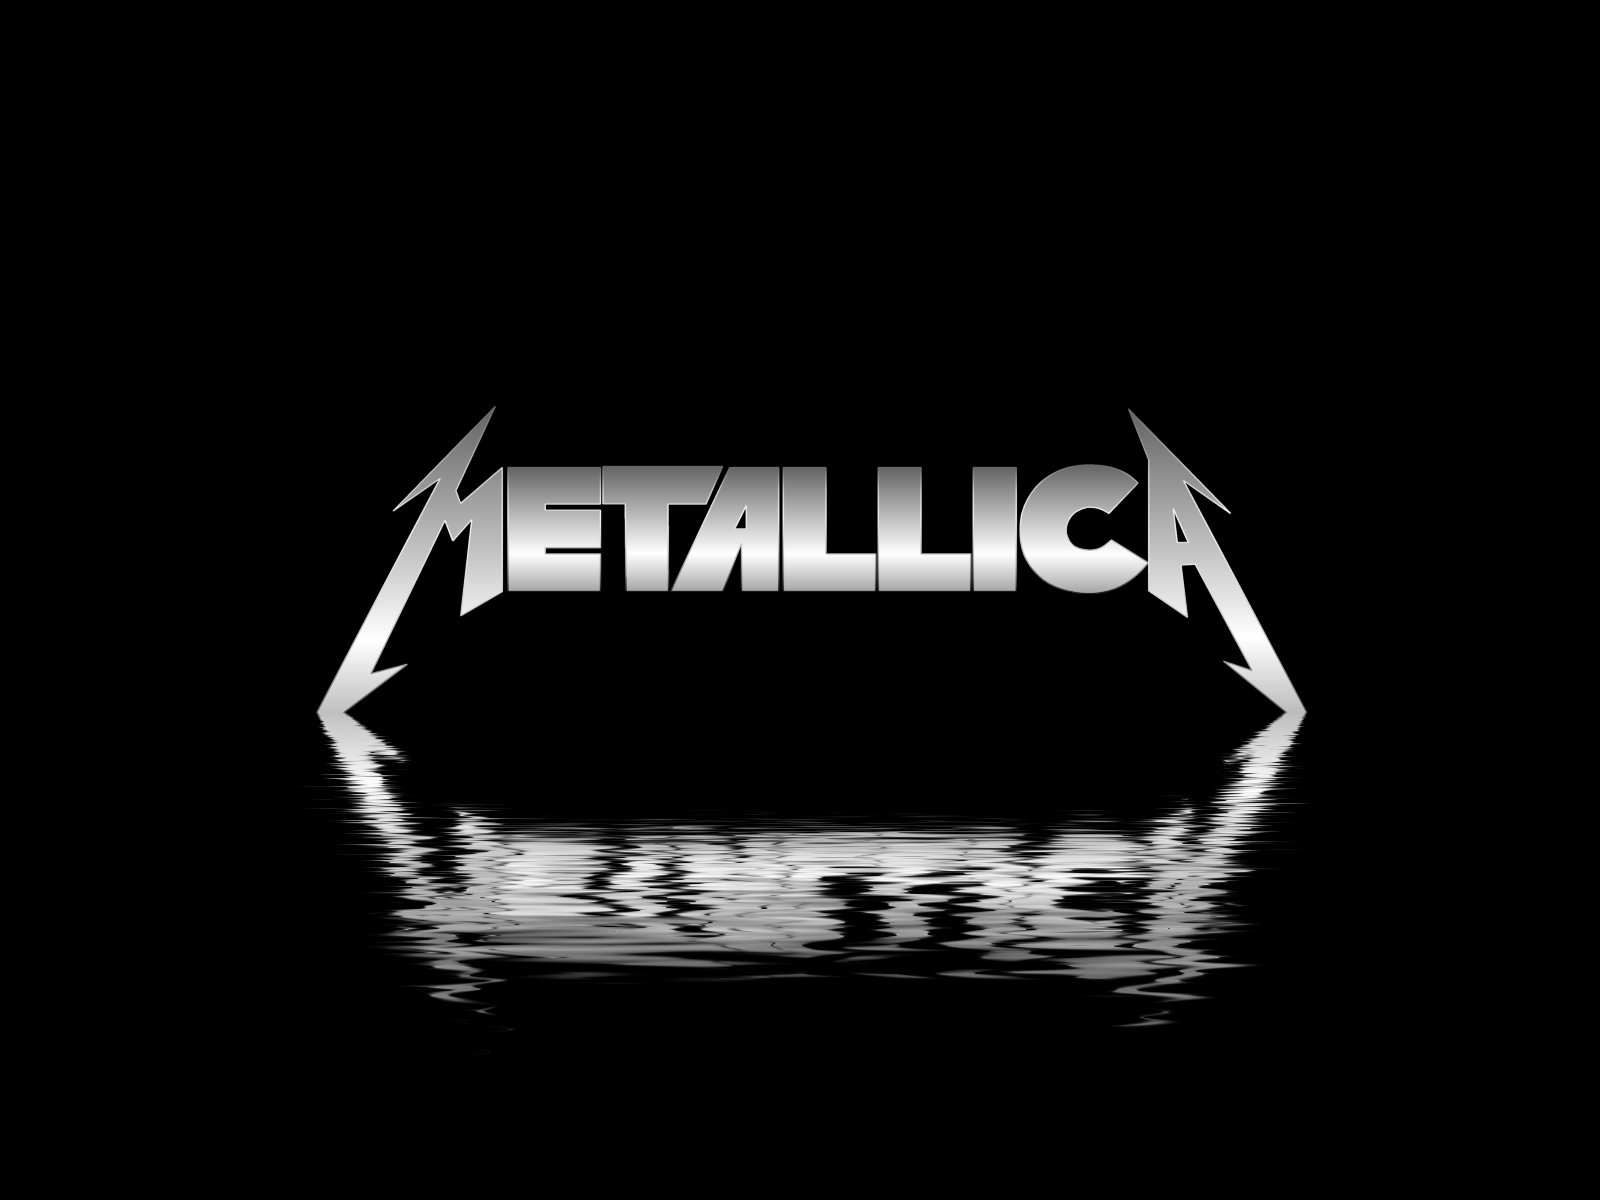 Metallica Album Covers Wallpaper Ing Gallery